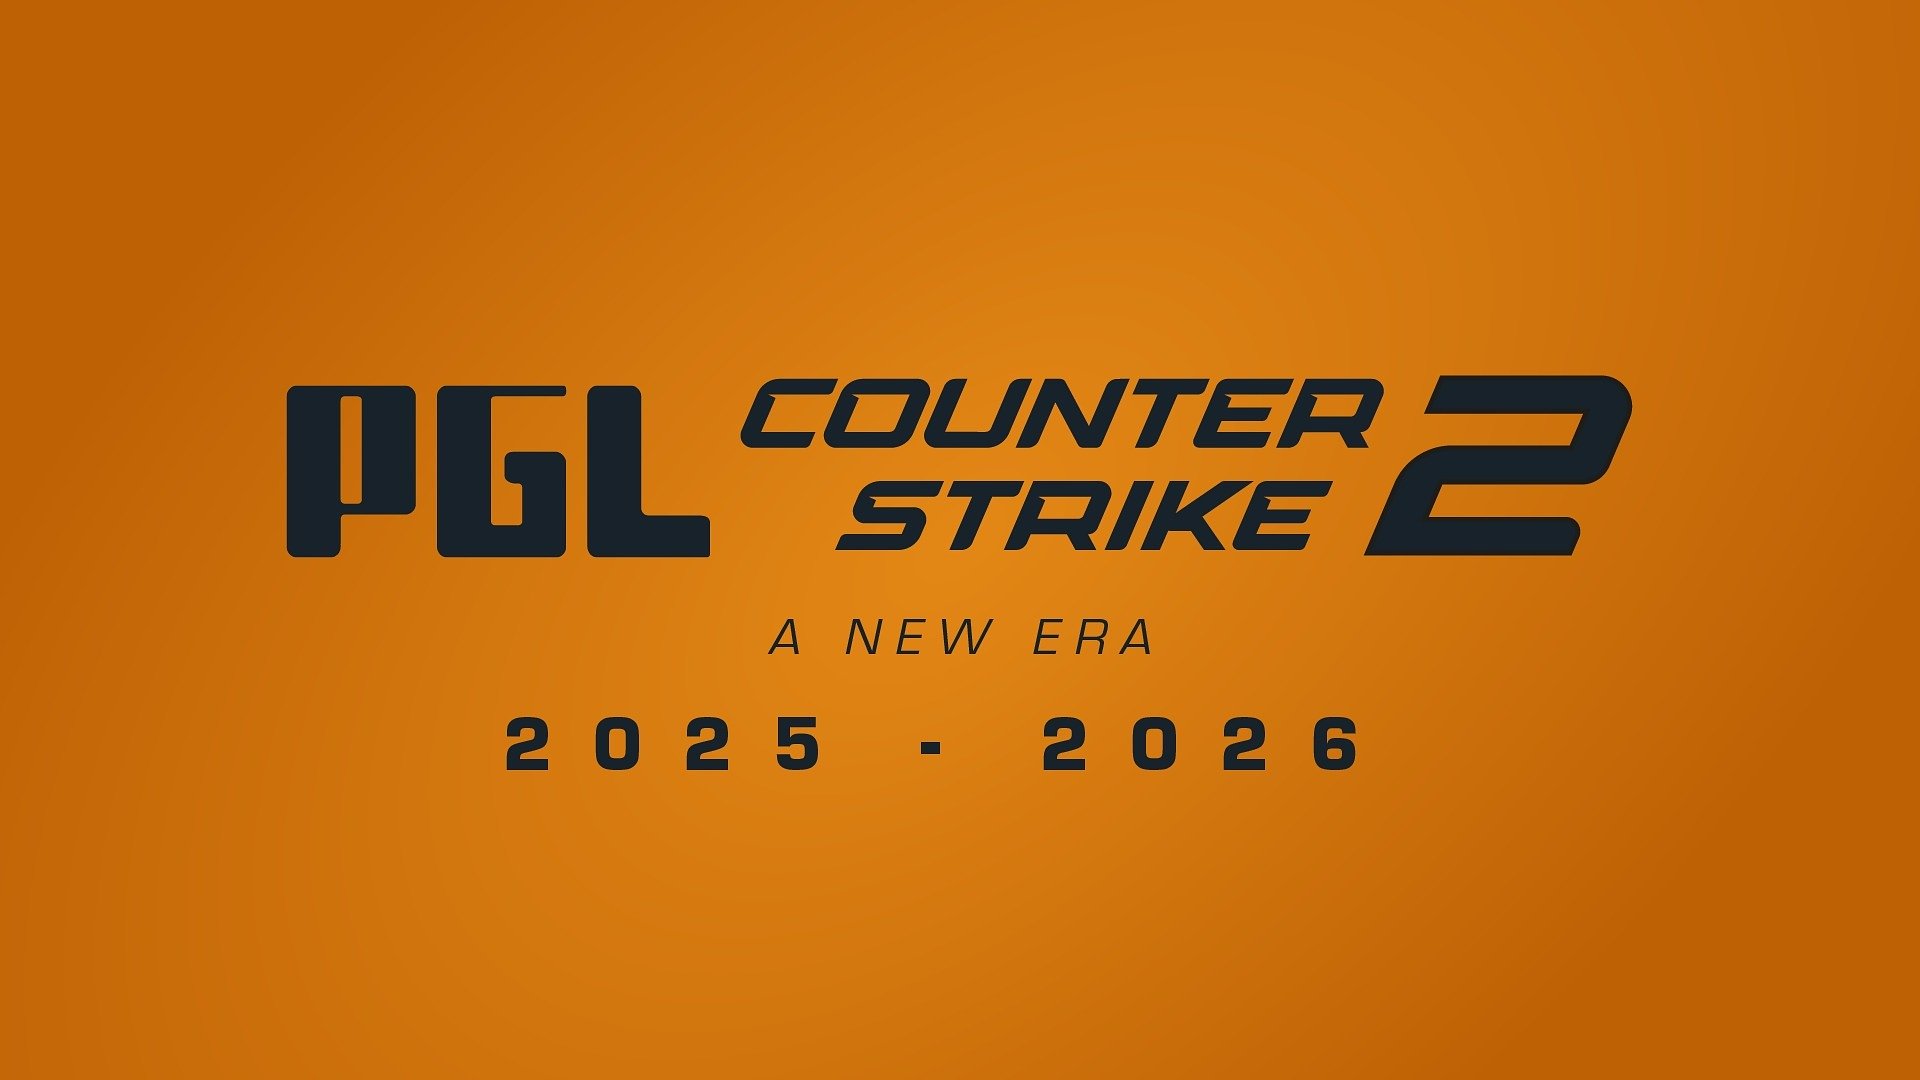 Foto de PGL Esports da a conocer los datos para su próxima liga de Counter-Strike 2 a partir del 2025